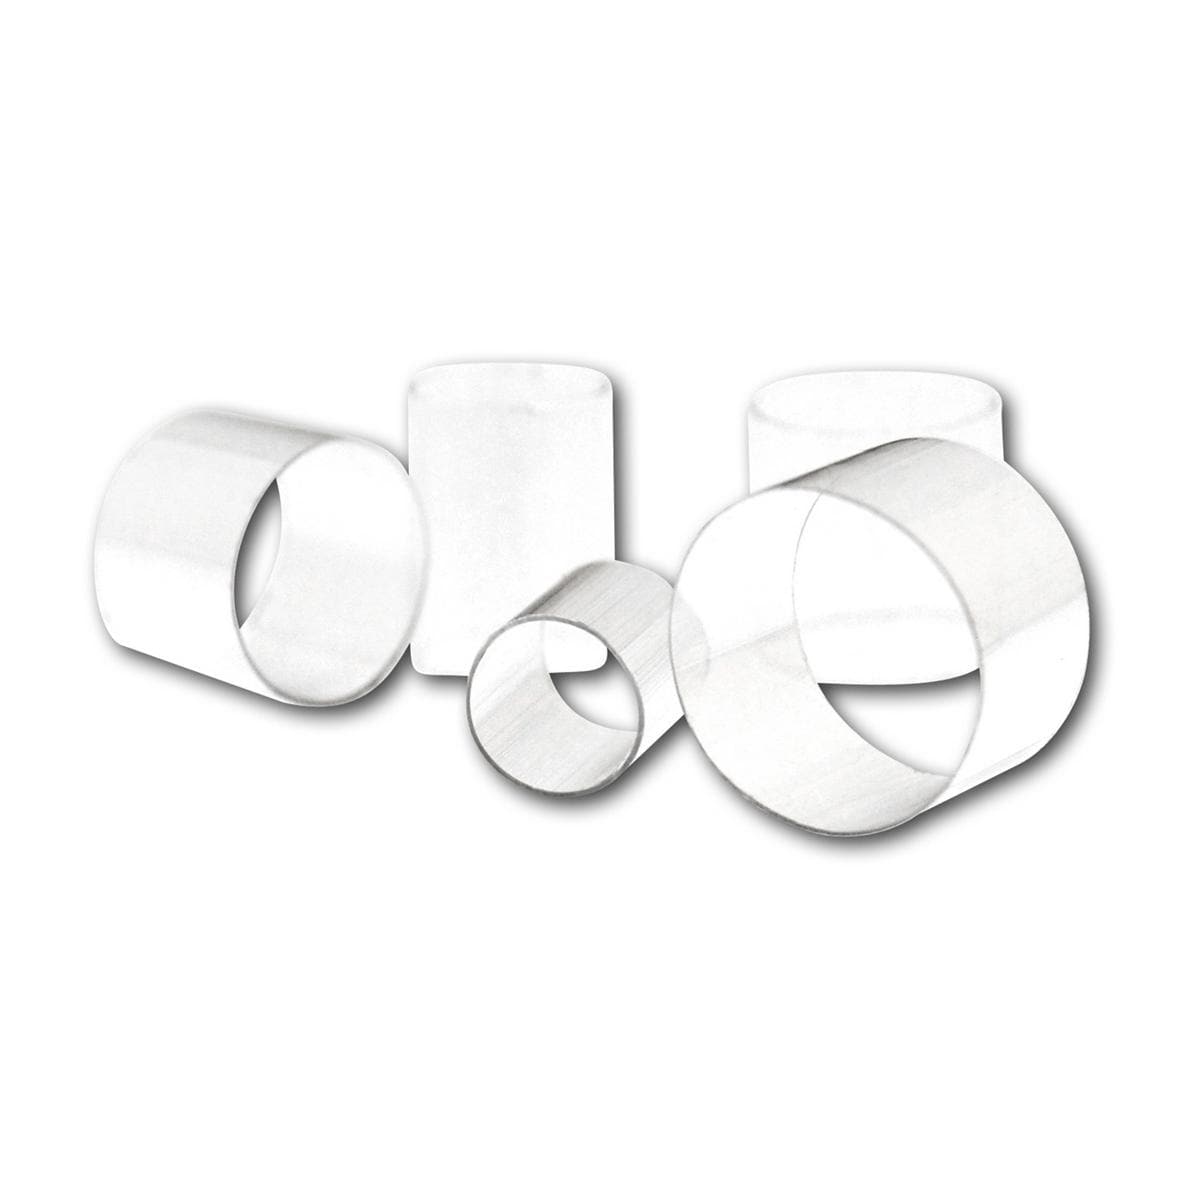 Transparent Ringe - Nachfüllpackung - Nr. 5, Packung 12 Stück